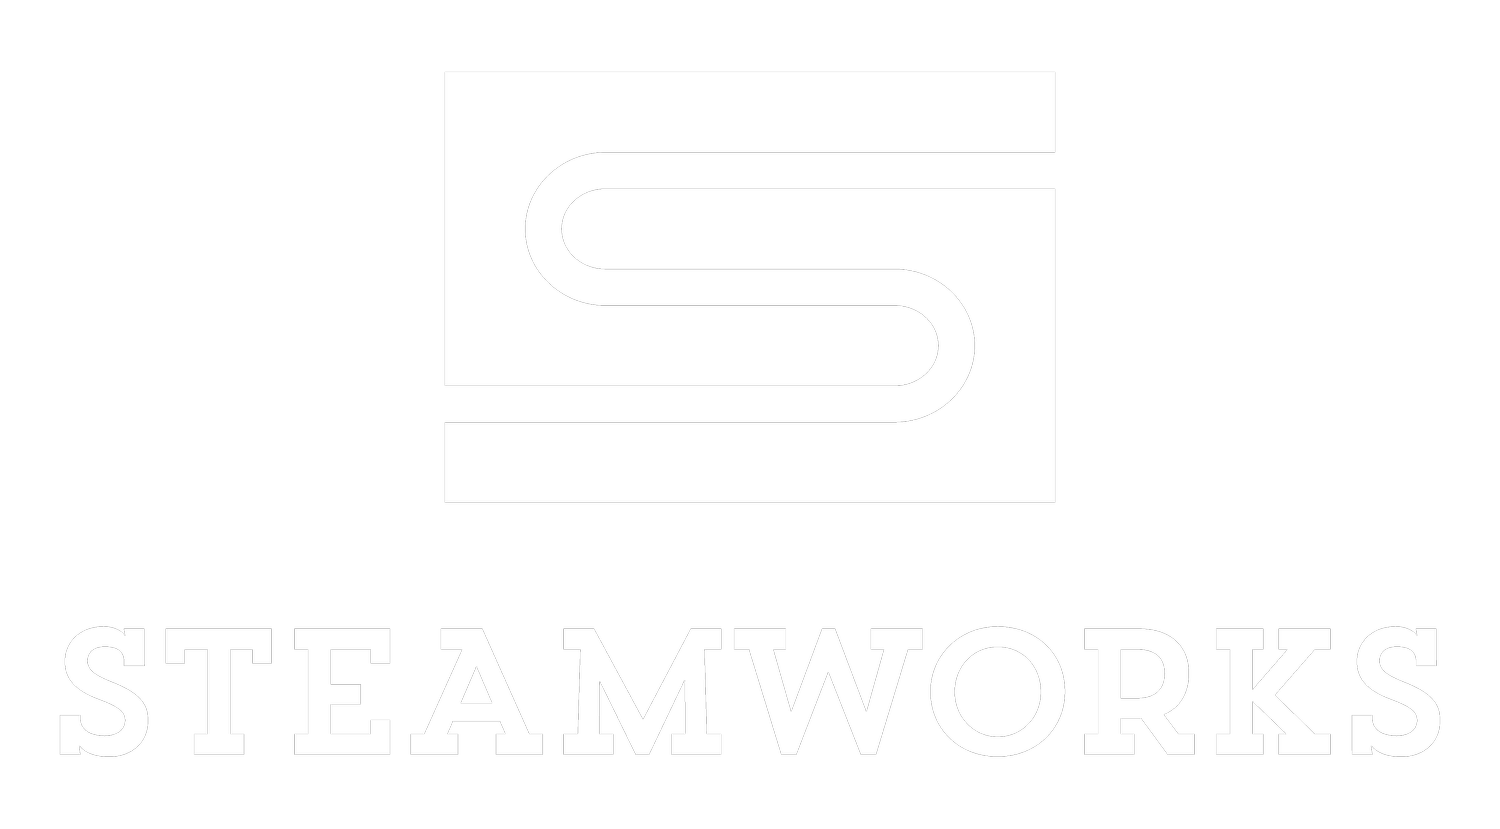 STEAMWORKS, LLC